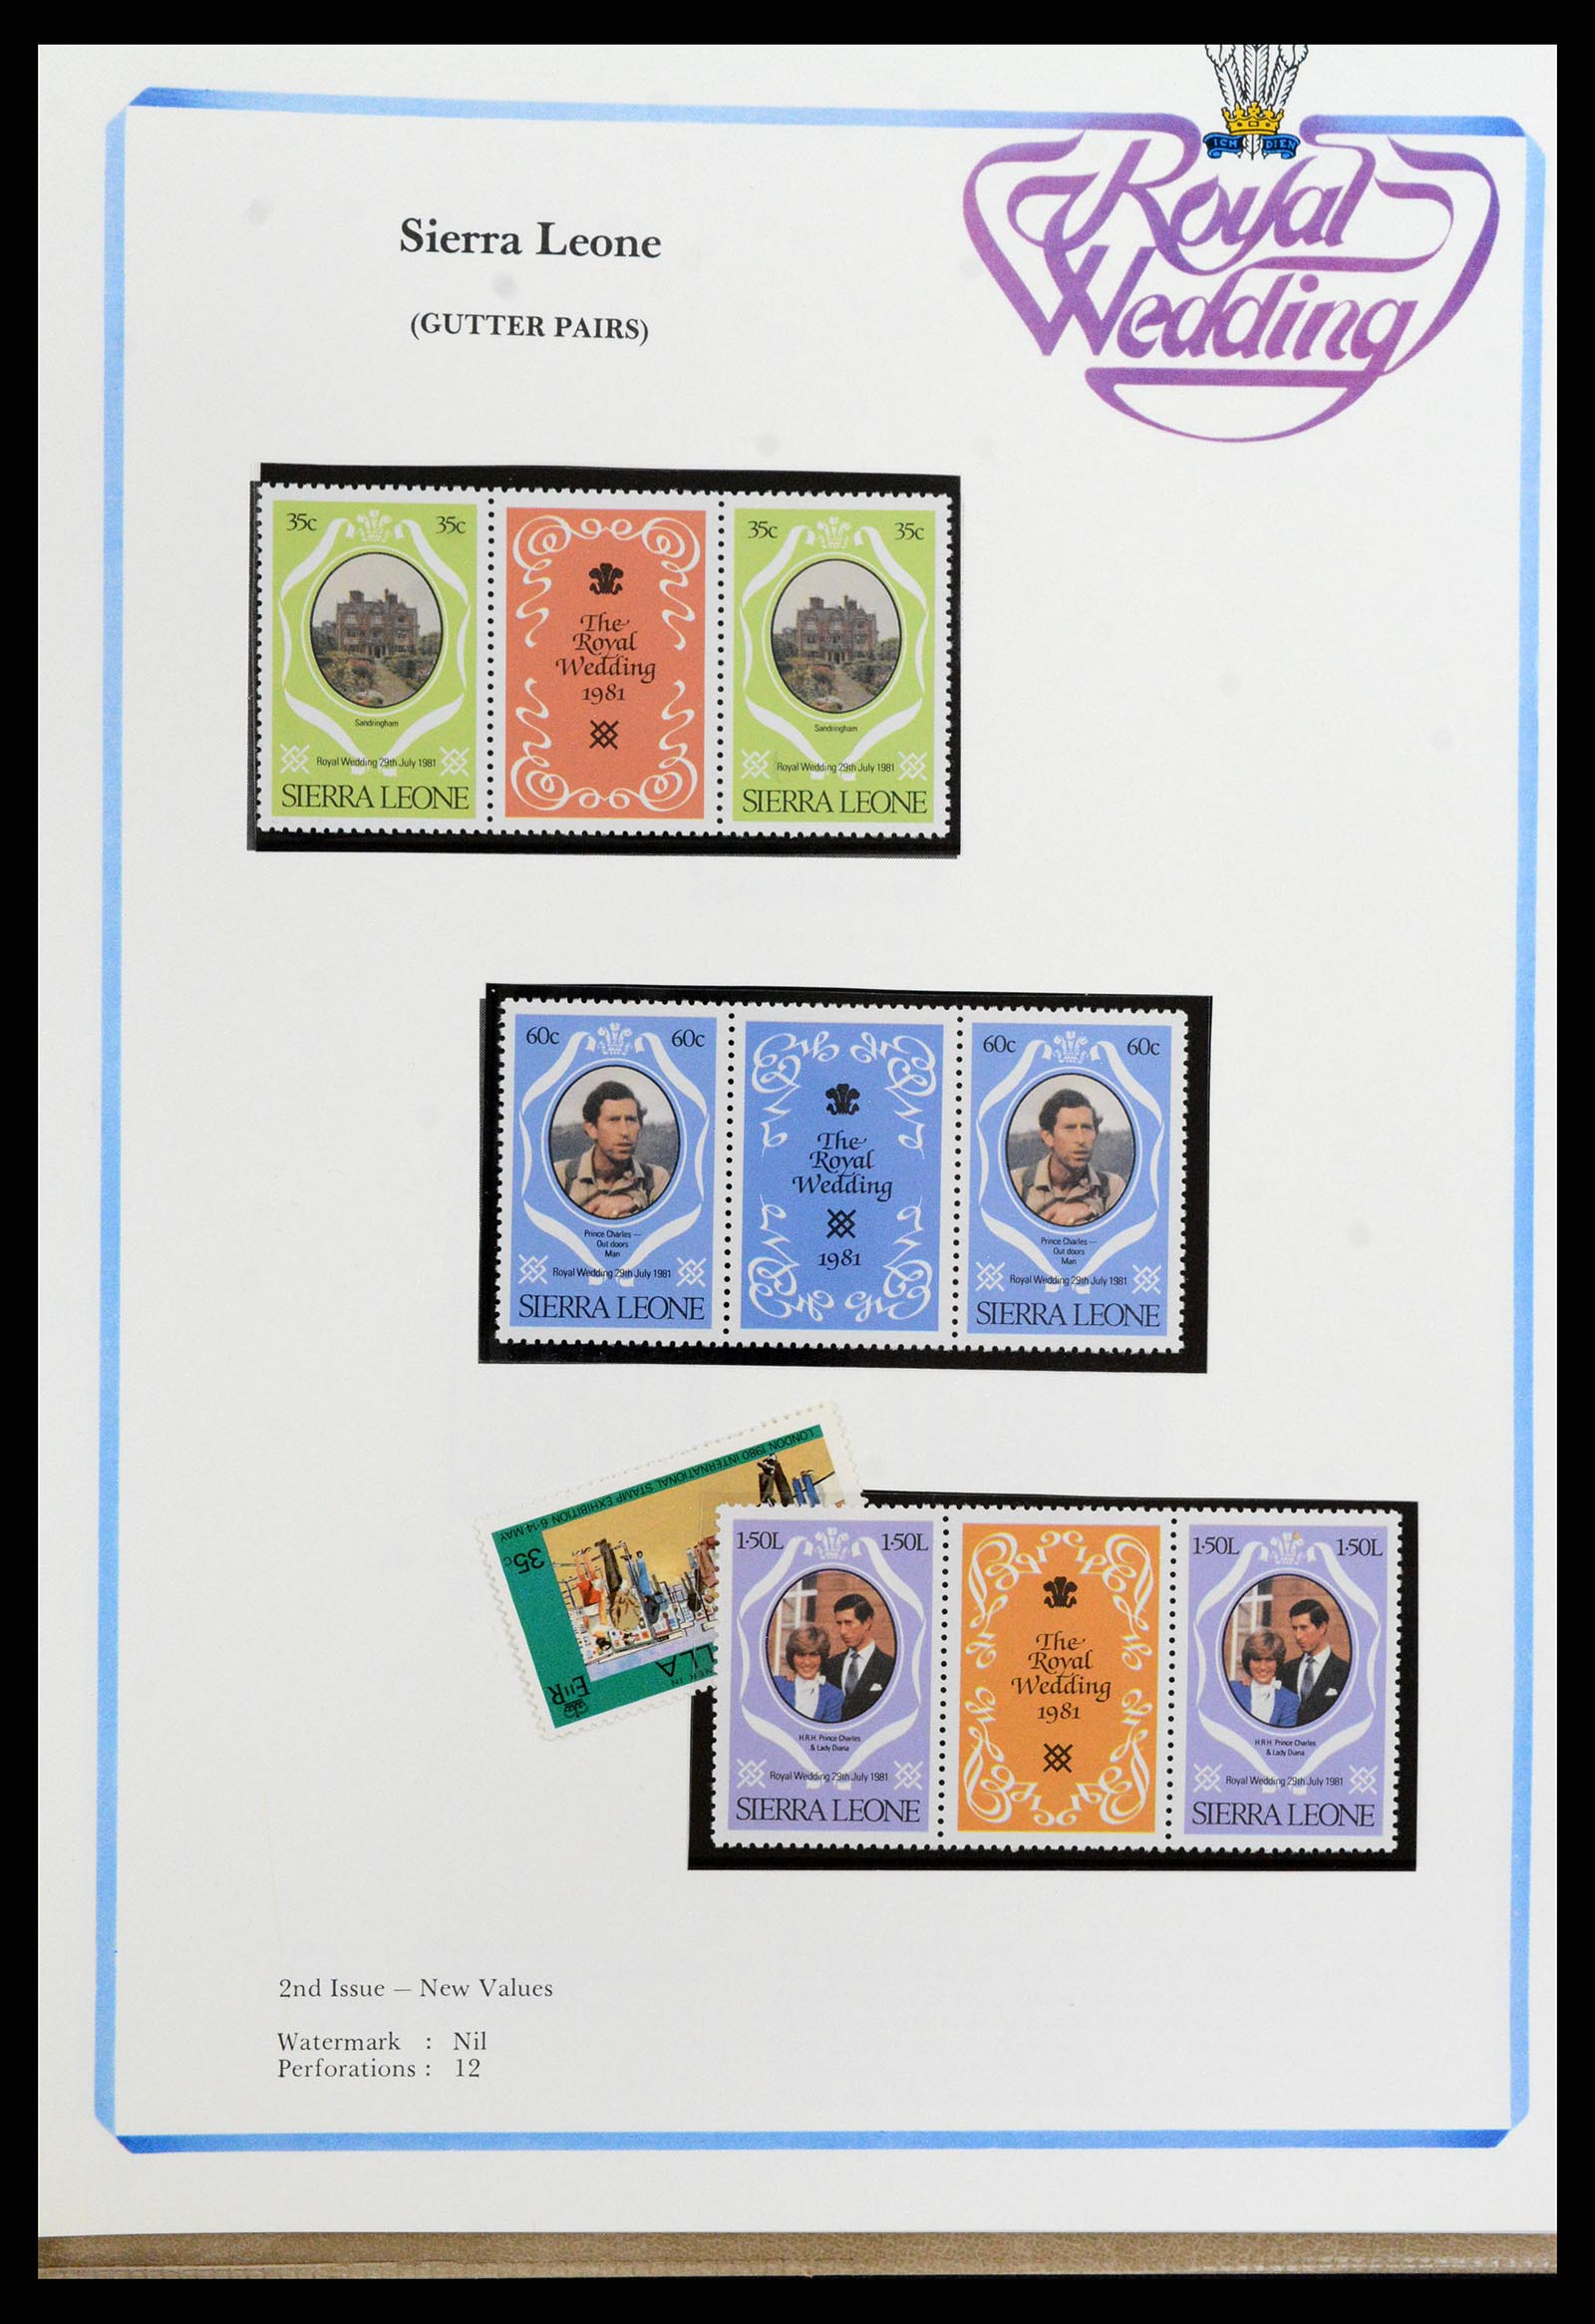 37818 314 - Stamp Collection 37818 Royal Wedding 1981.